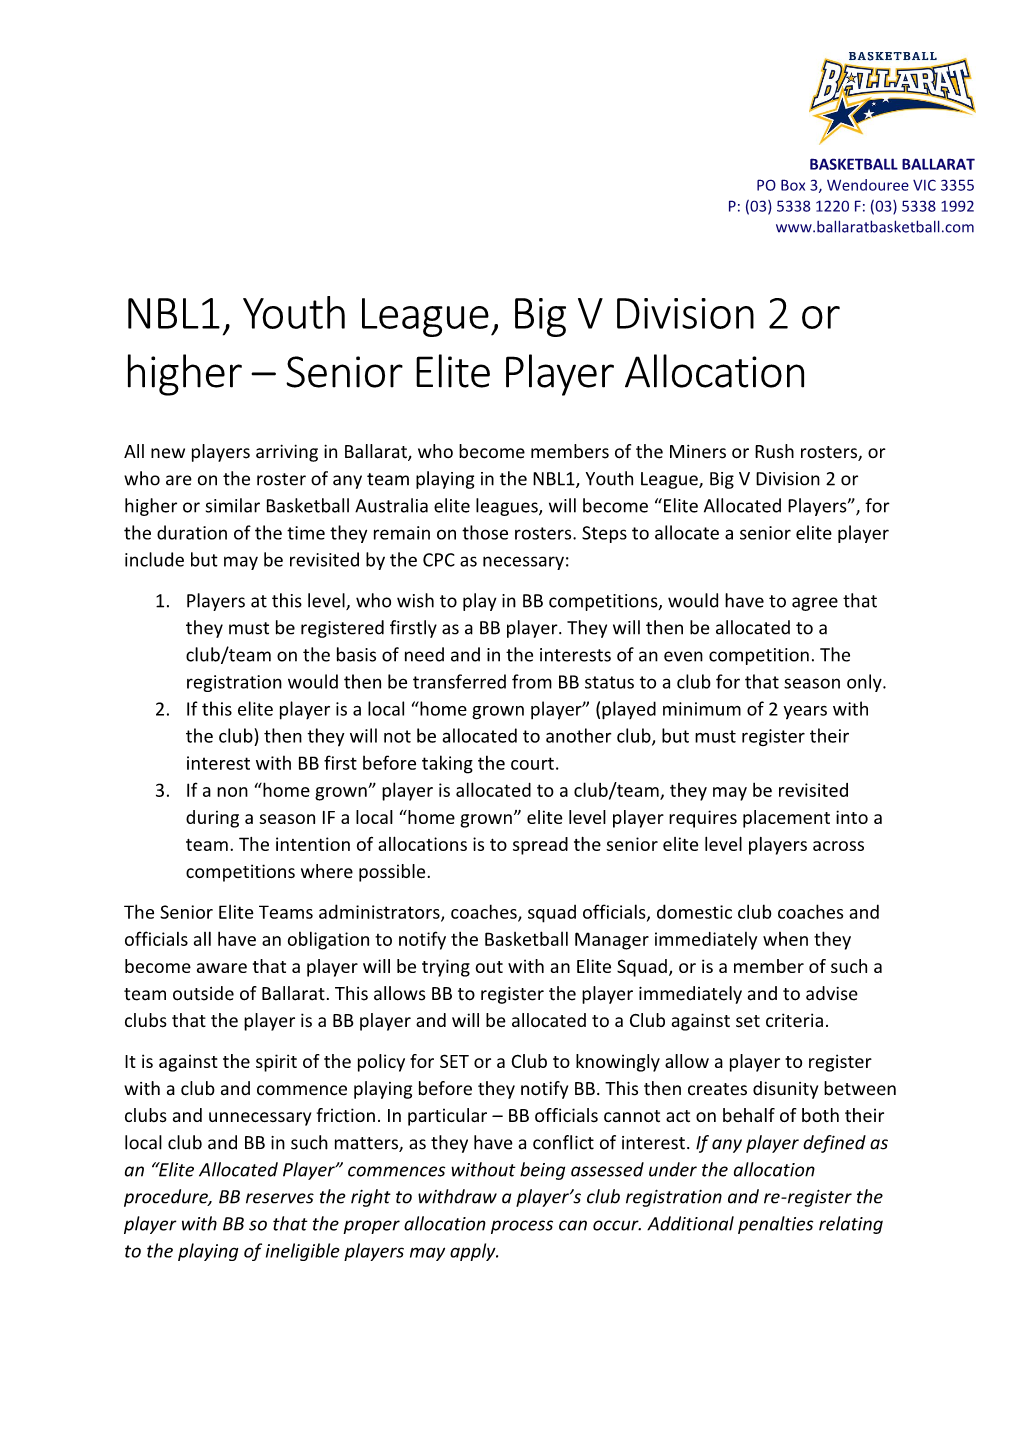 NBL1, Youth League, Big V Division 2 Or Higher – Senior Elite Player Allocation